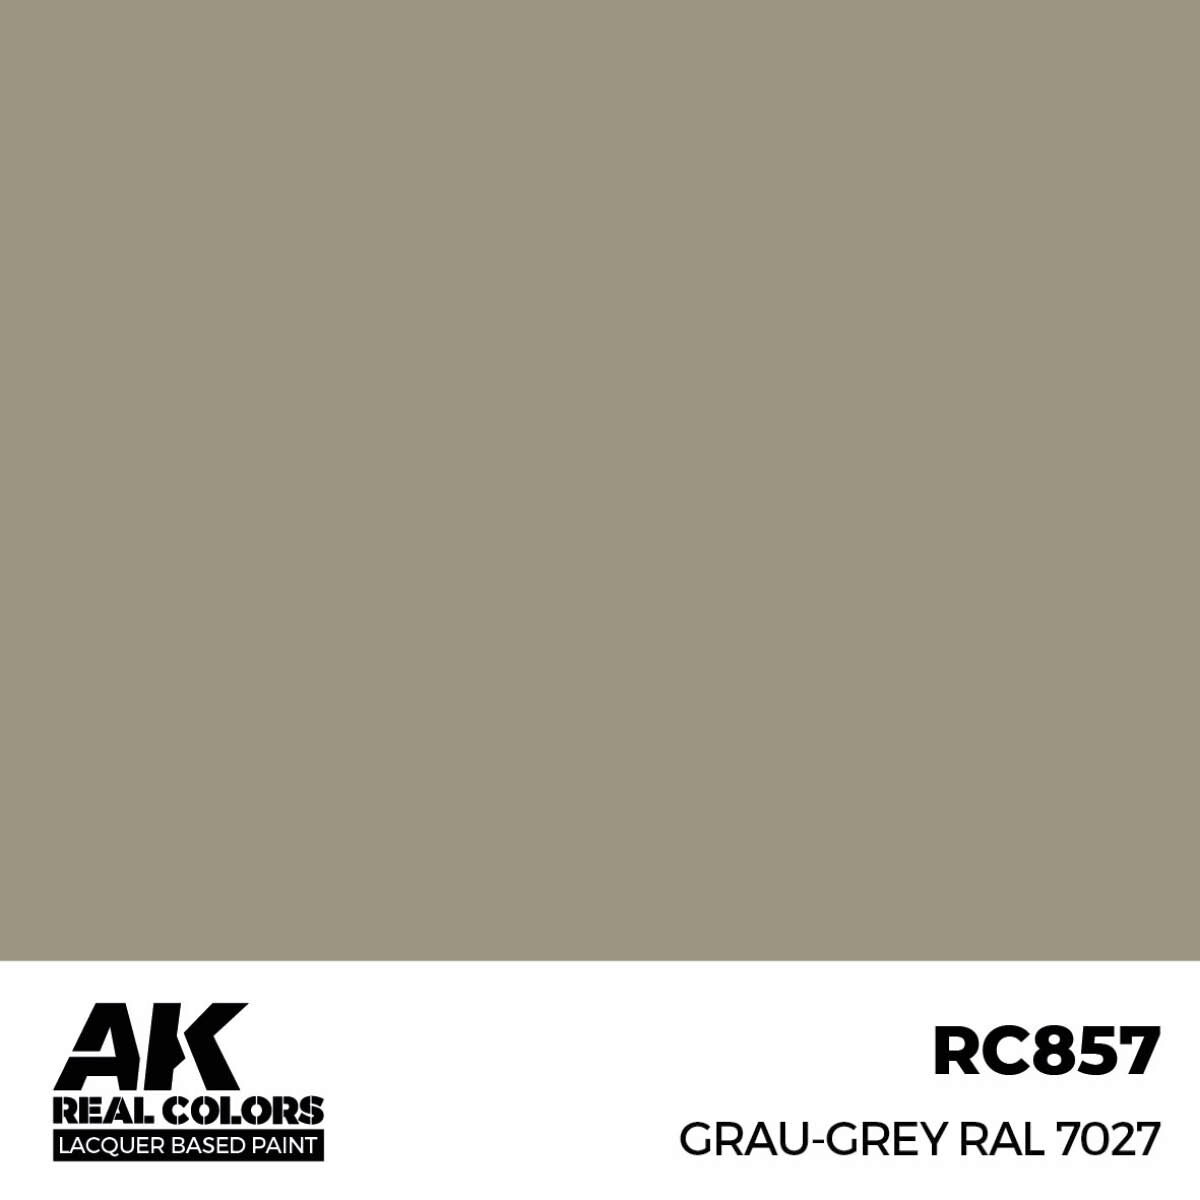 AK RC857 Real Colors Grau-Grey RAL 7027 17 ml.